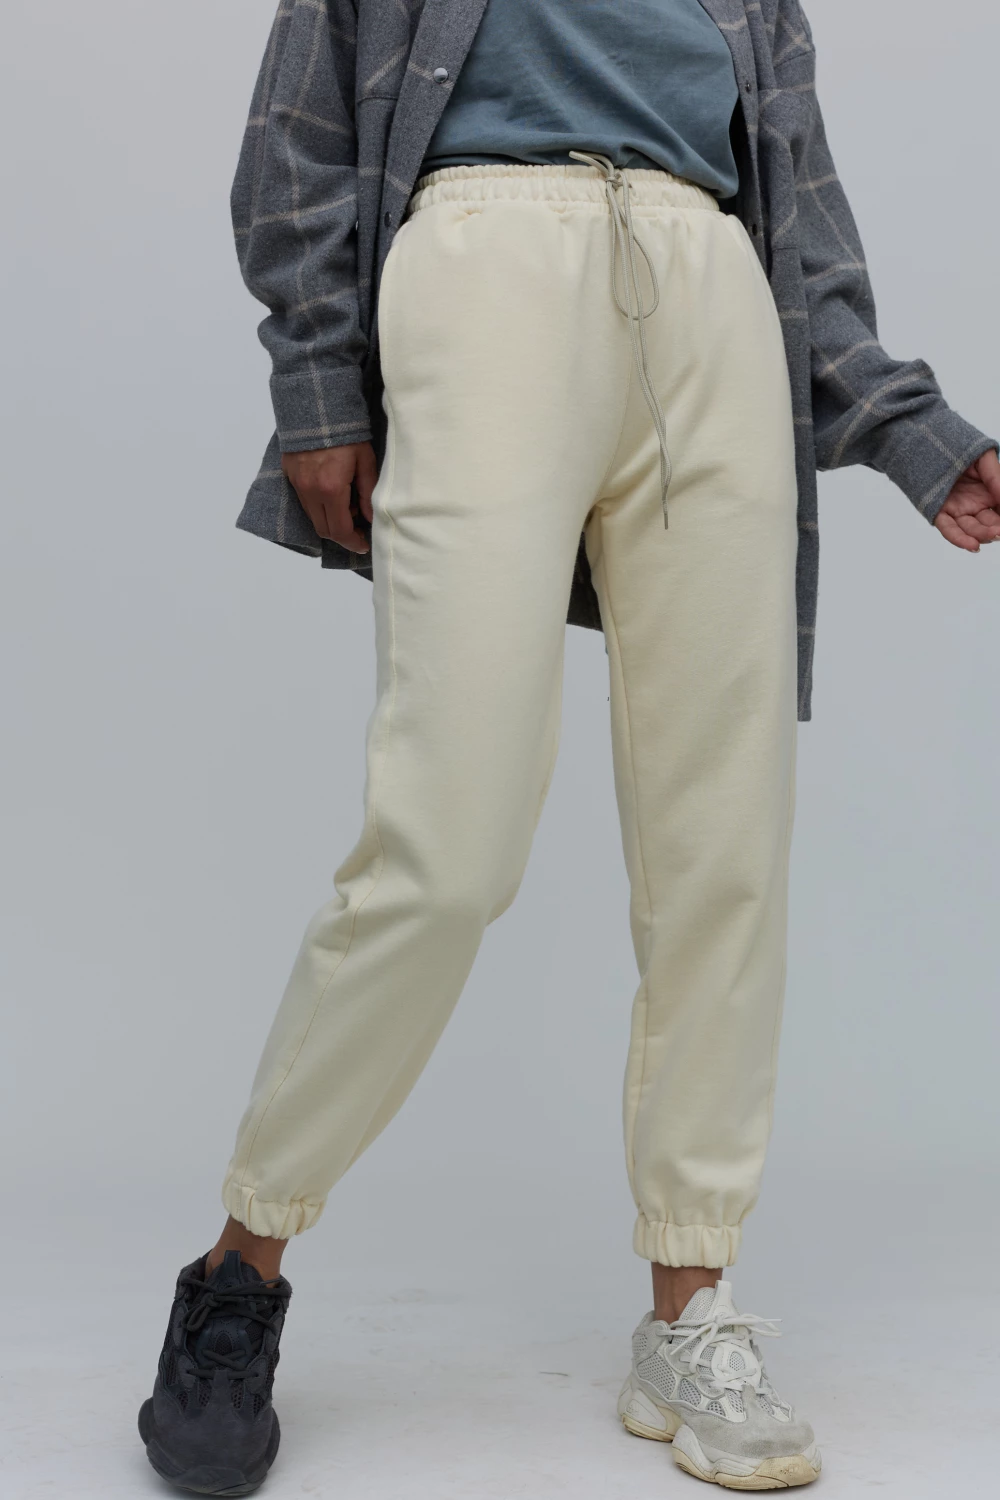 pants "unisex" in vanilla color